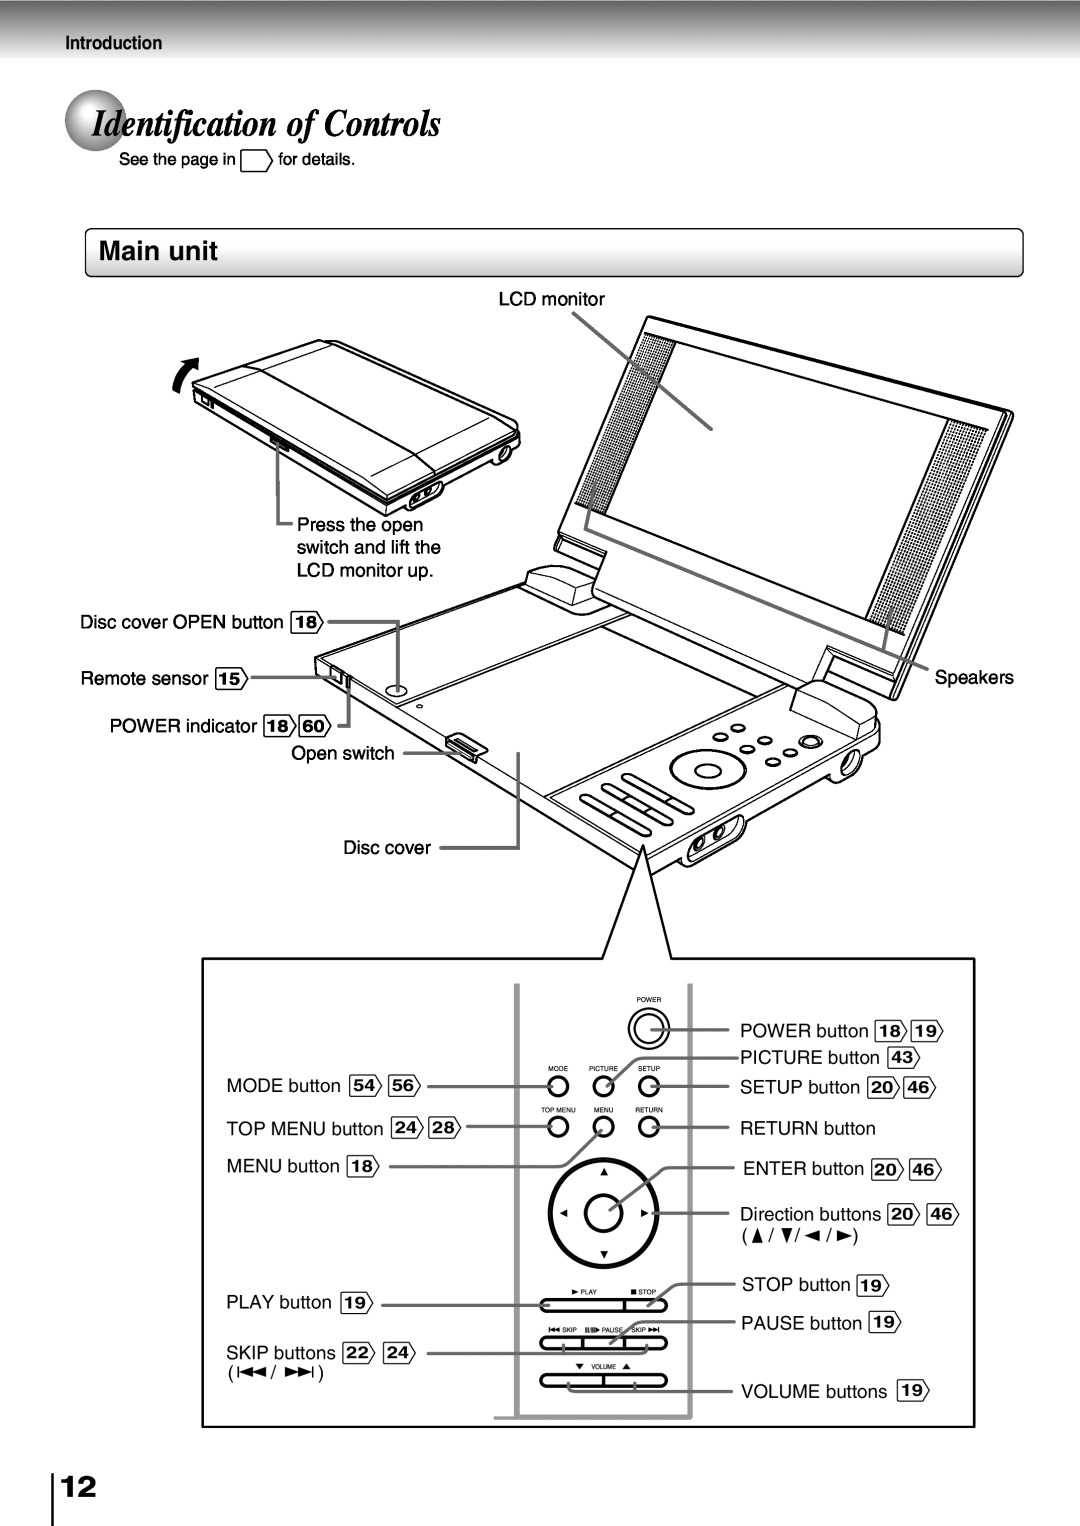 Toshiba SD-P2800SE Identification of Controls, Main unit, Introduction, Remote sensor, MODE button, TOP MENU button 